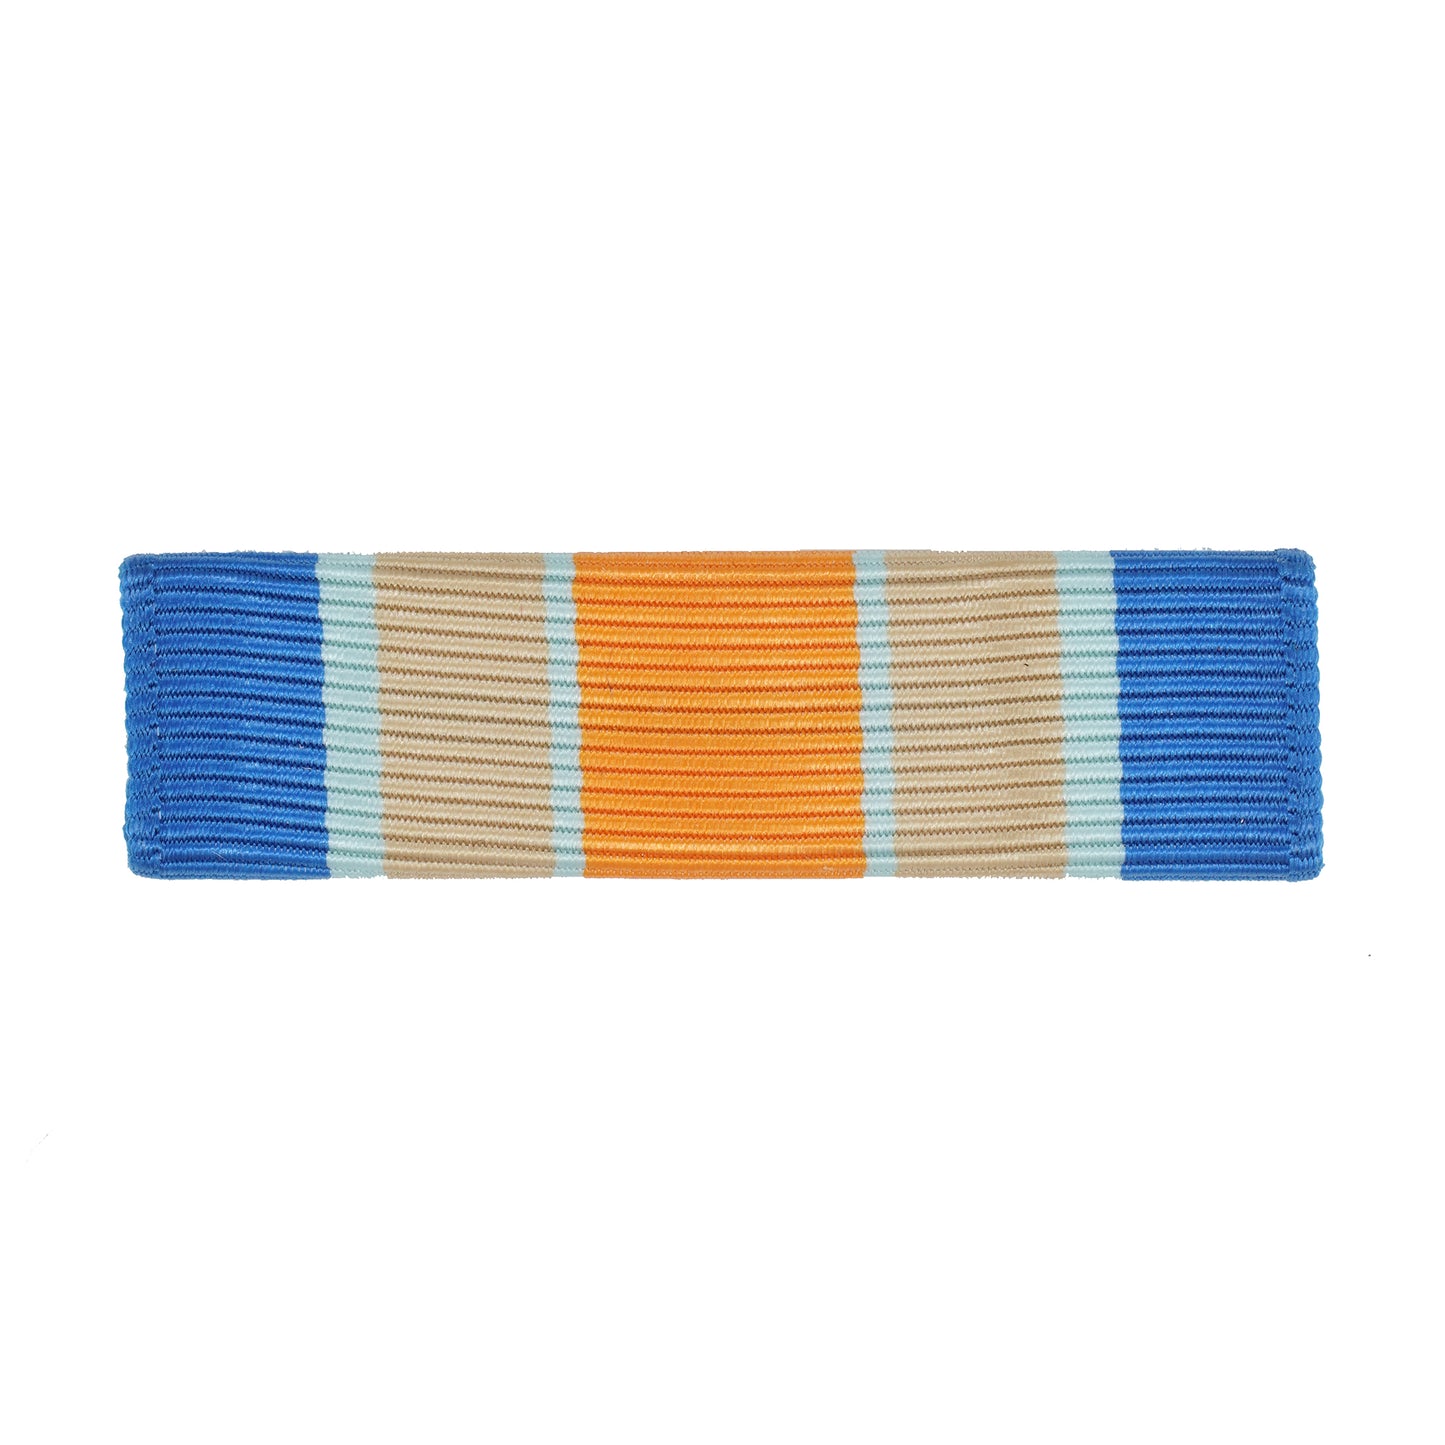 U.S. Army operation inherent resolve ribbon.